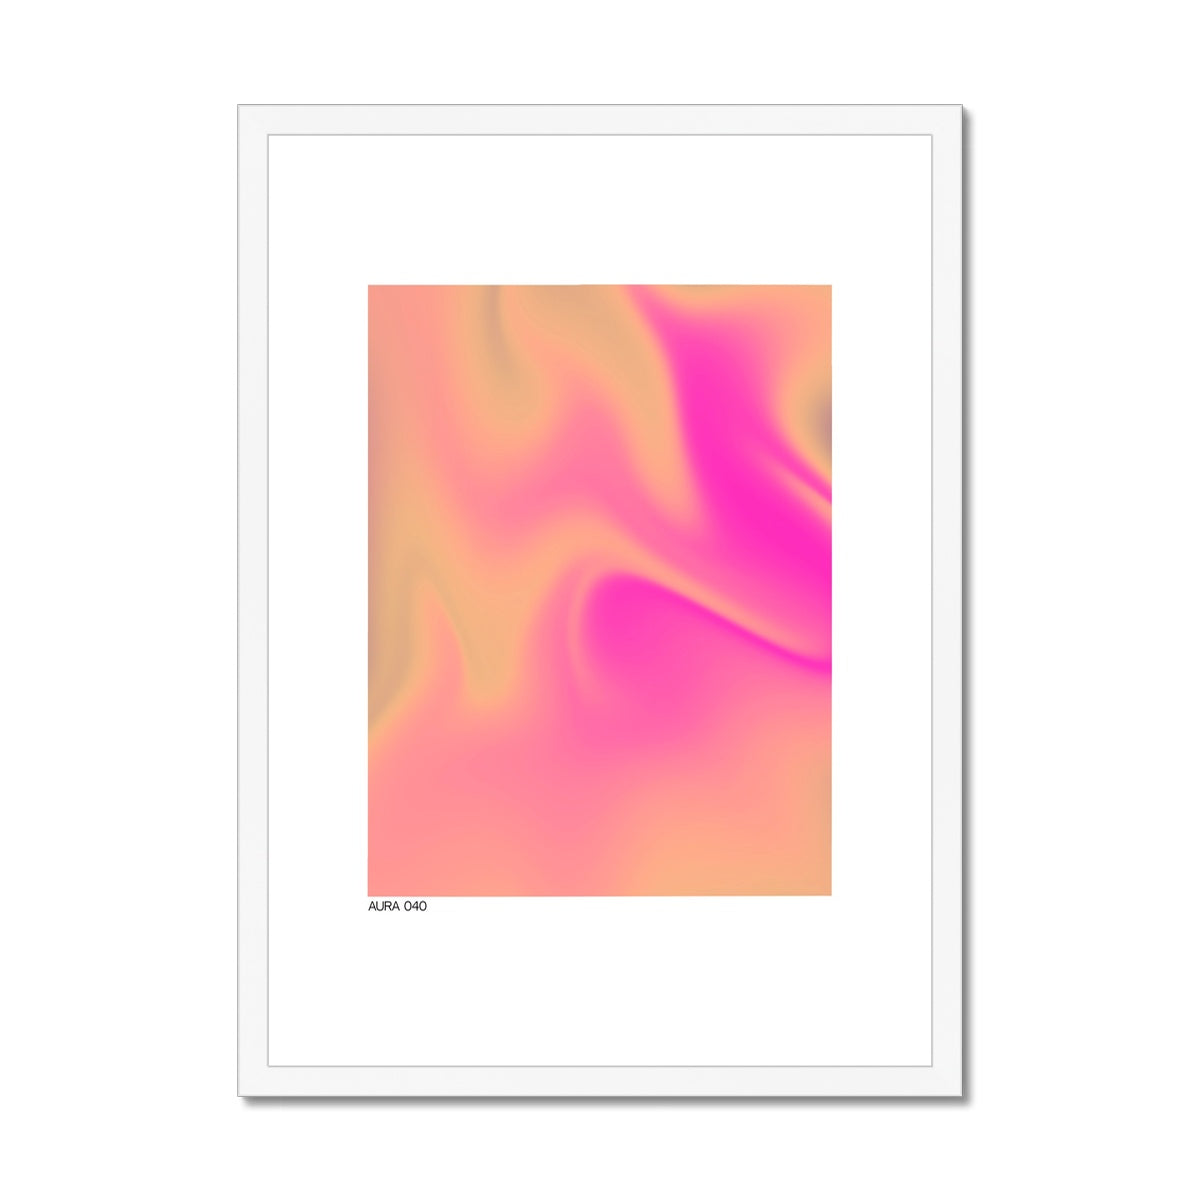 aura 040 Framed & Mounted Print